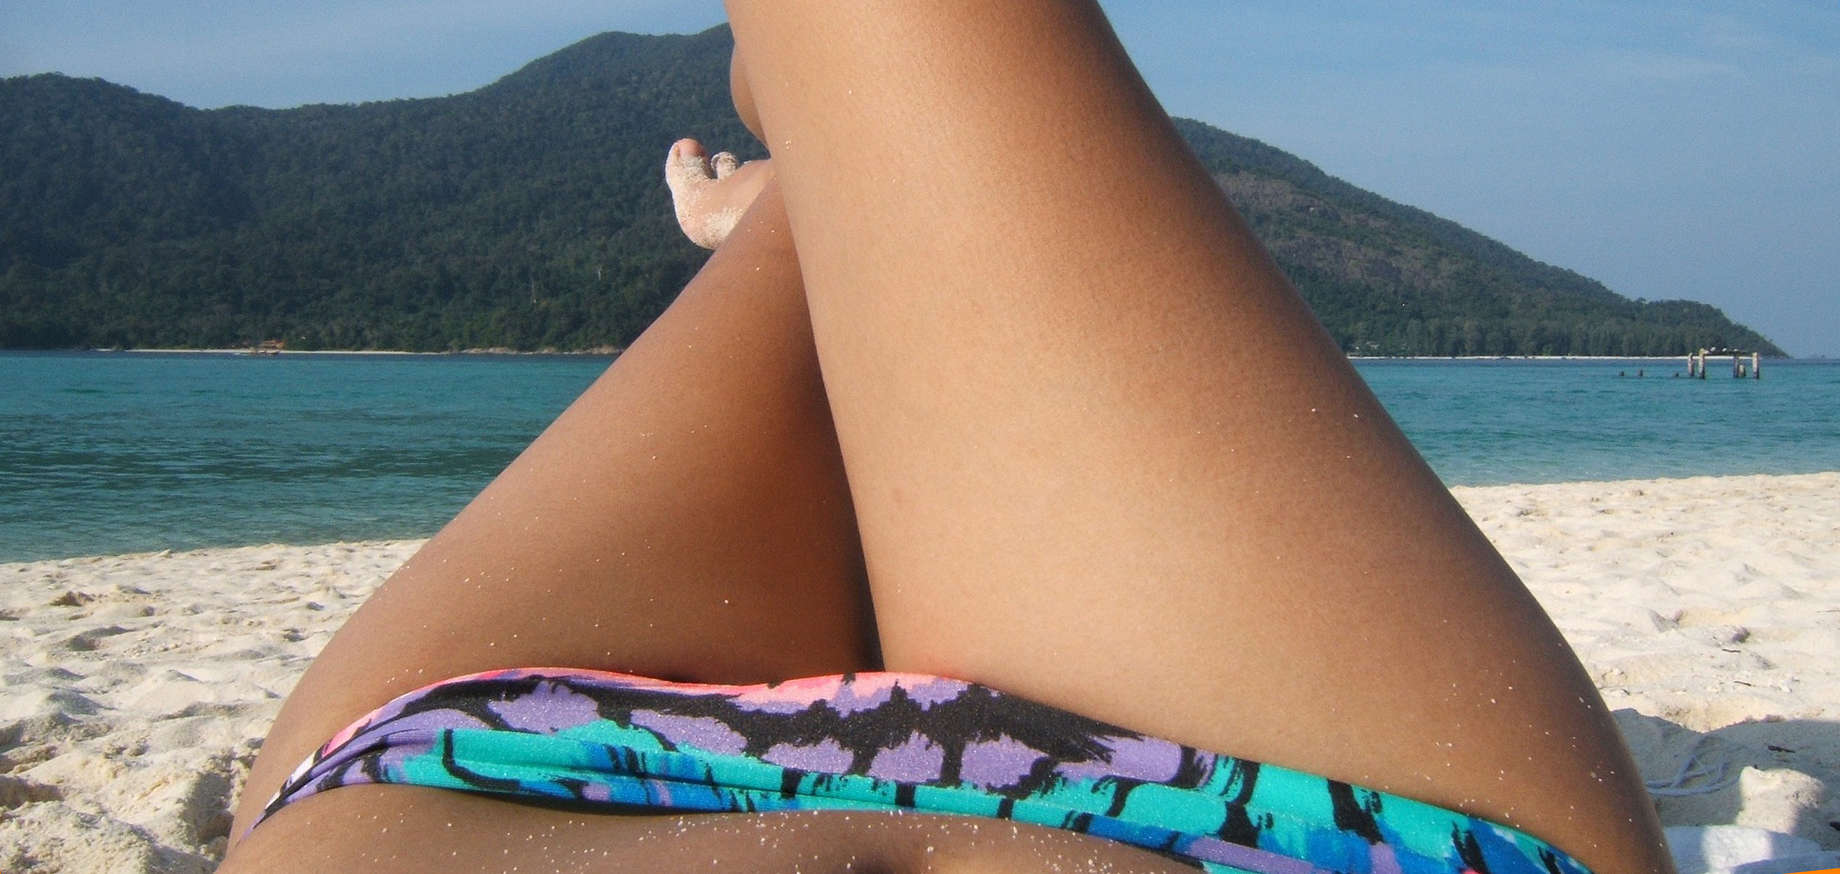 Blij in bikini! Kom maar op met zon, zee en strand.